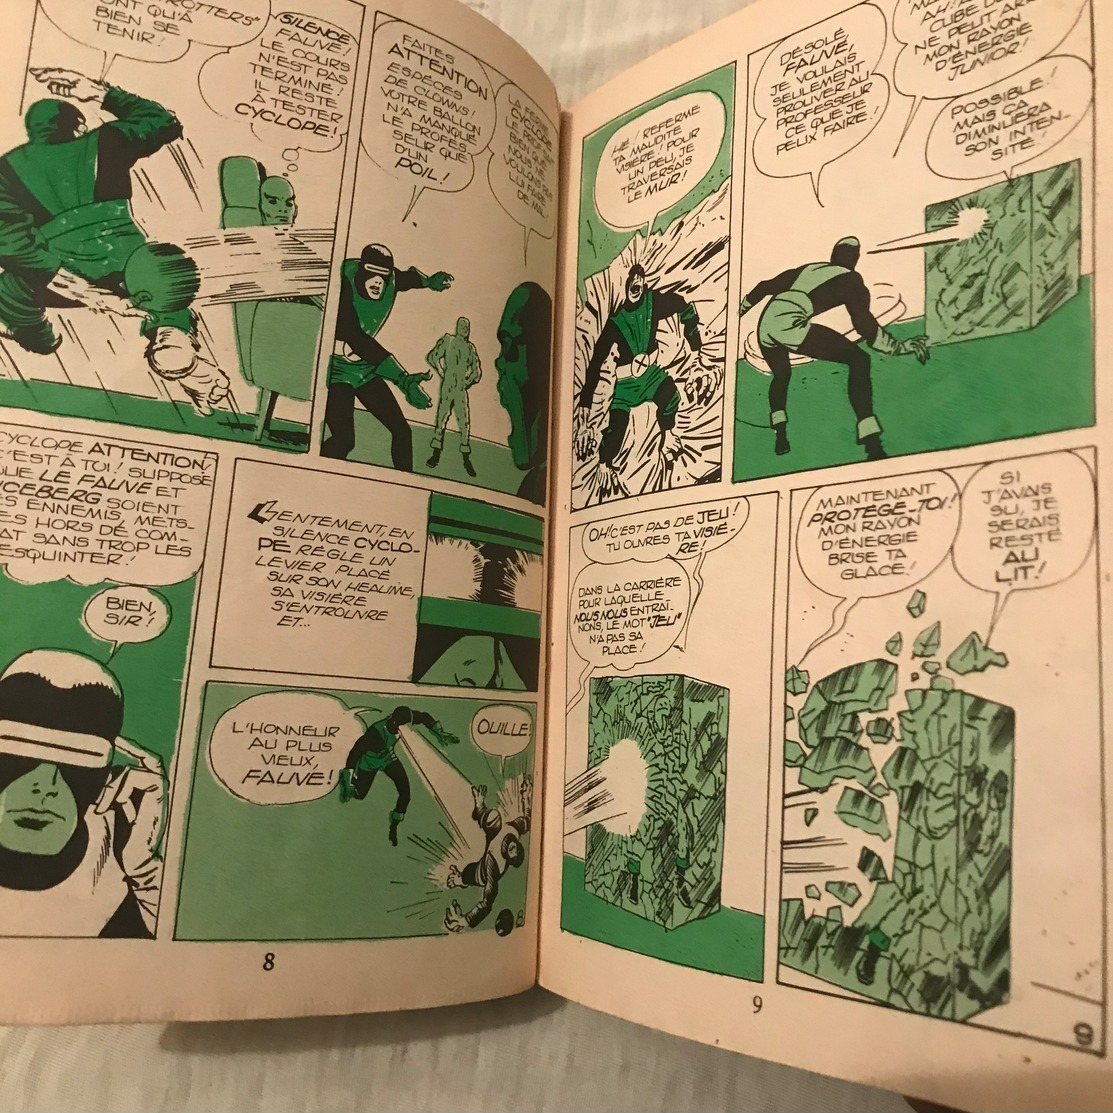 RARE Strange N°1  edition original 05 janvier 1970 Les super Héros de Stan Lee.